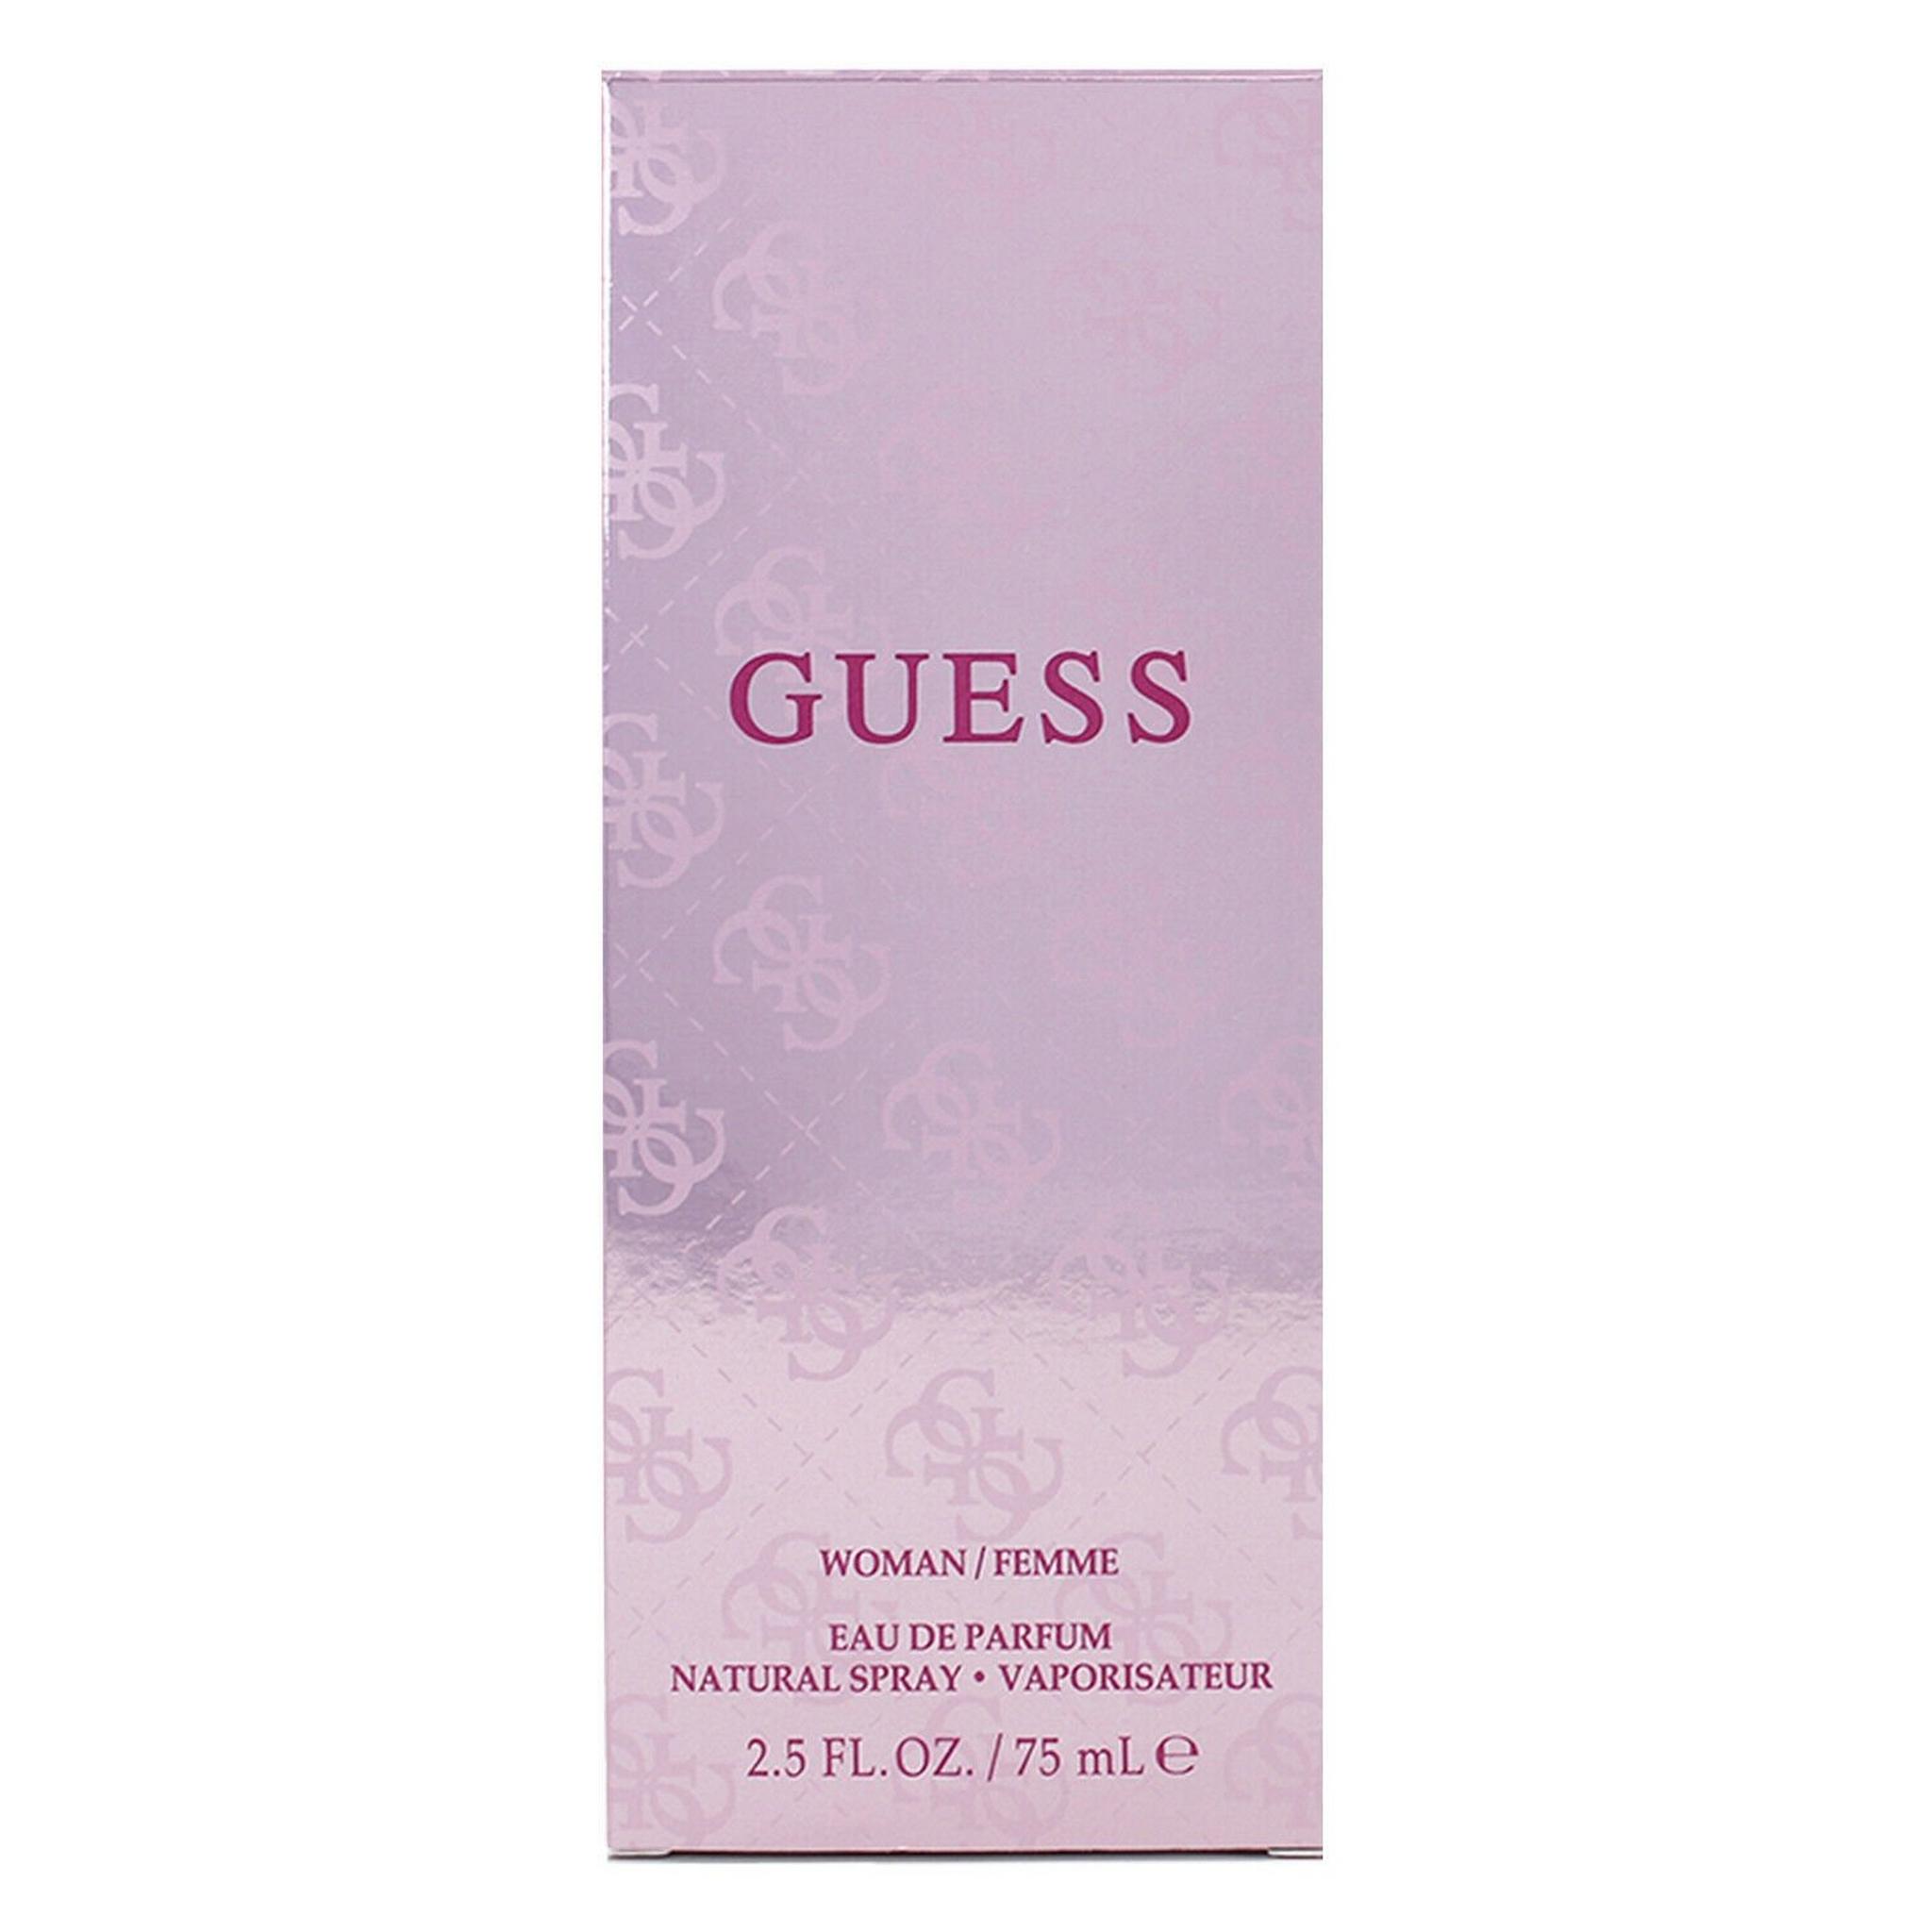 Guess by Guess For Women 75 ML Eau de Parfum